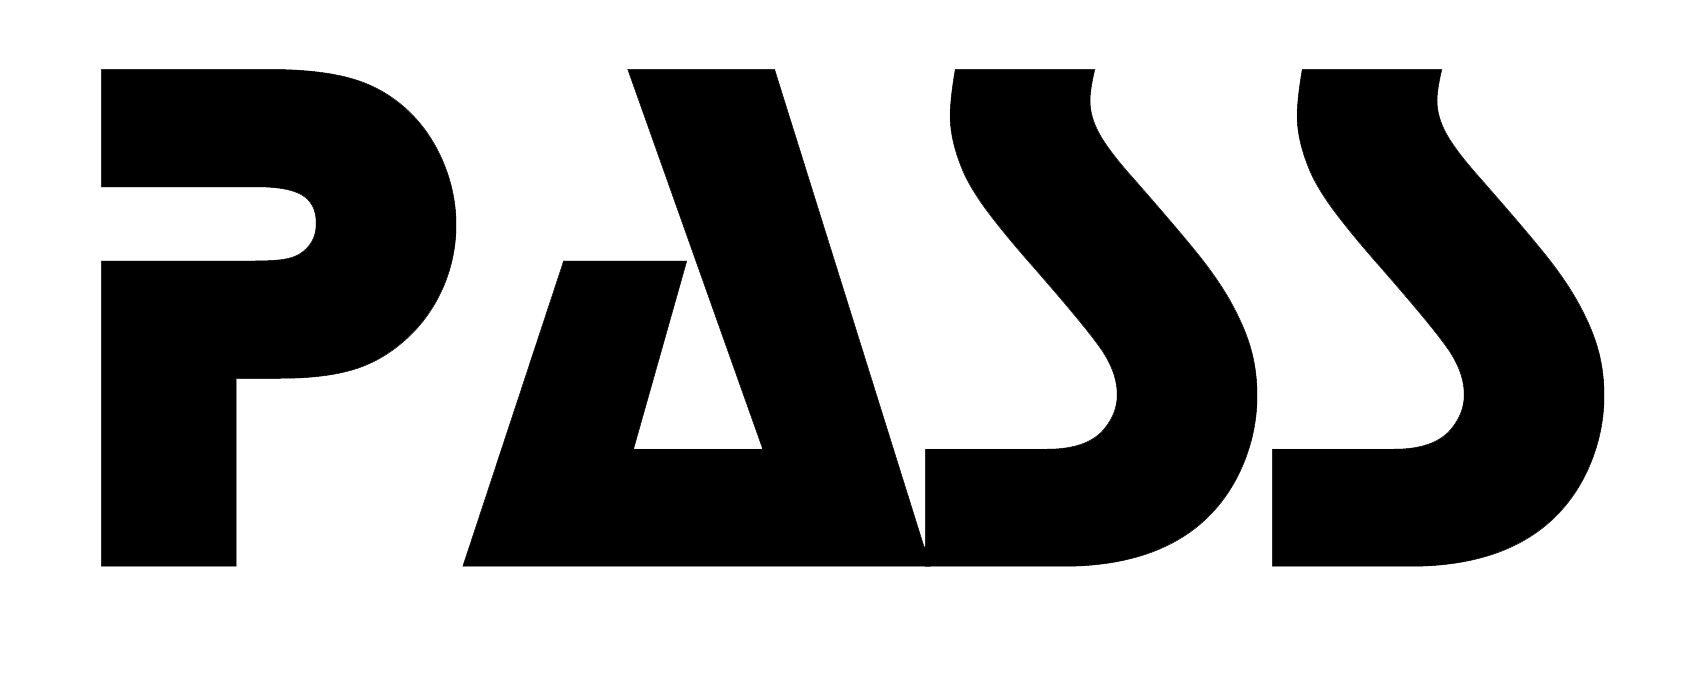 Int 60. Логотип Pass. Snake Pass лого. Russ Pass логотип. Tartarus Pass лого.